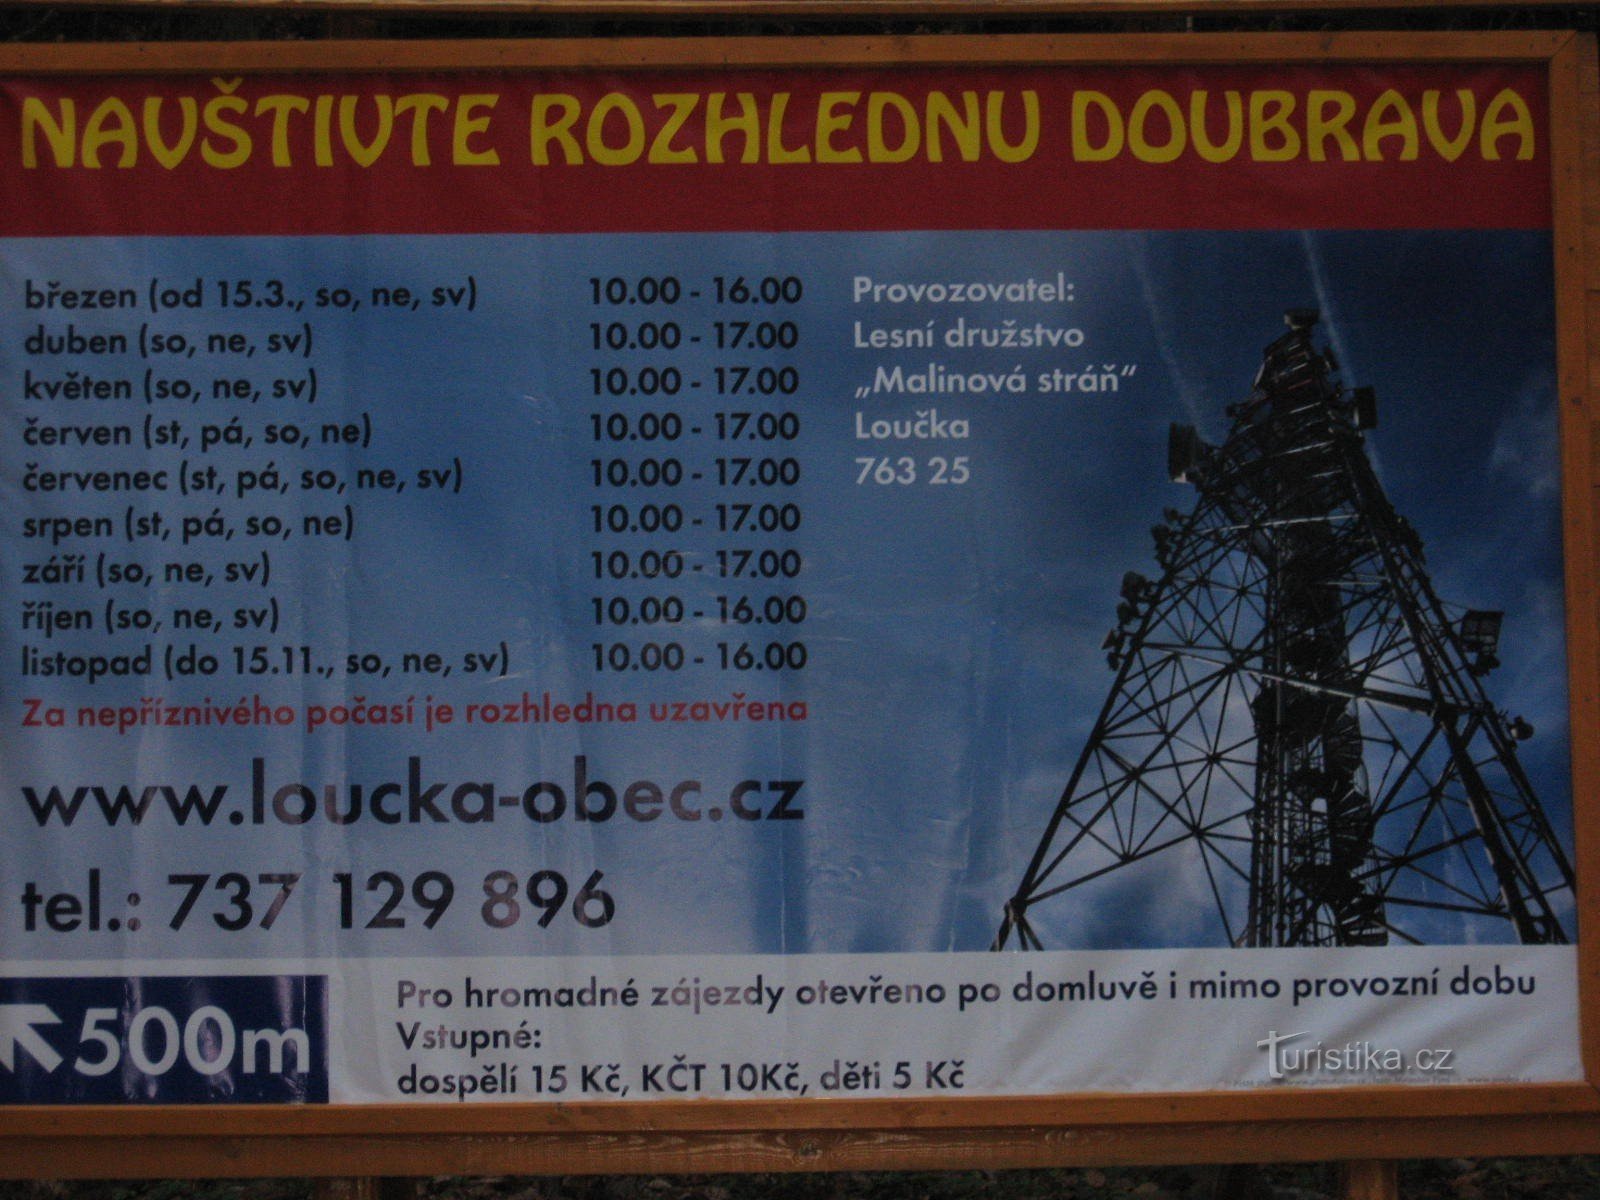 Aussichtsturm Doubrava